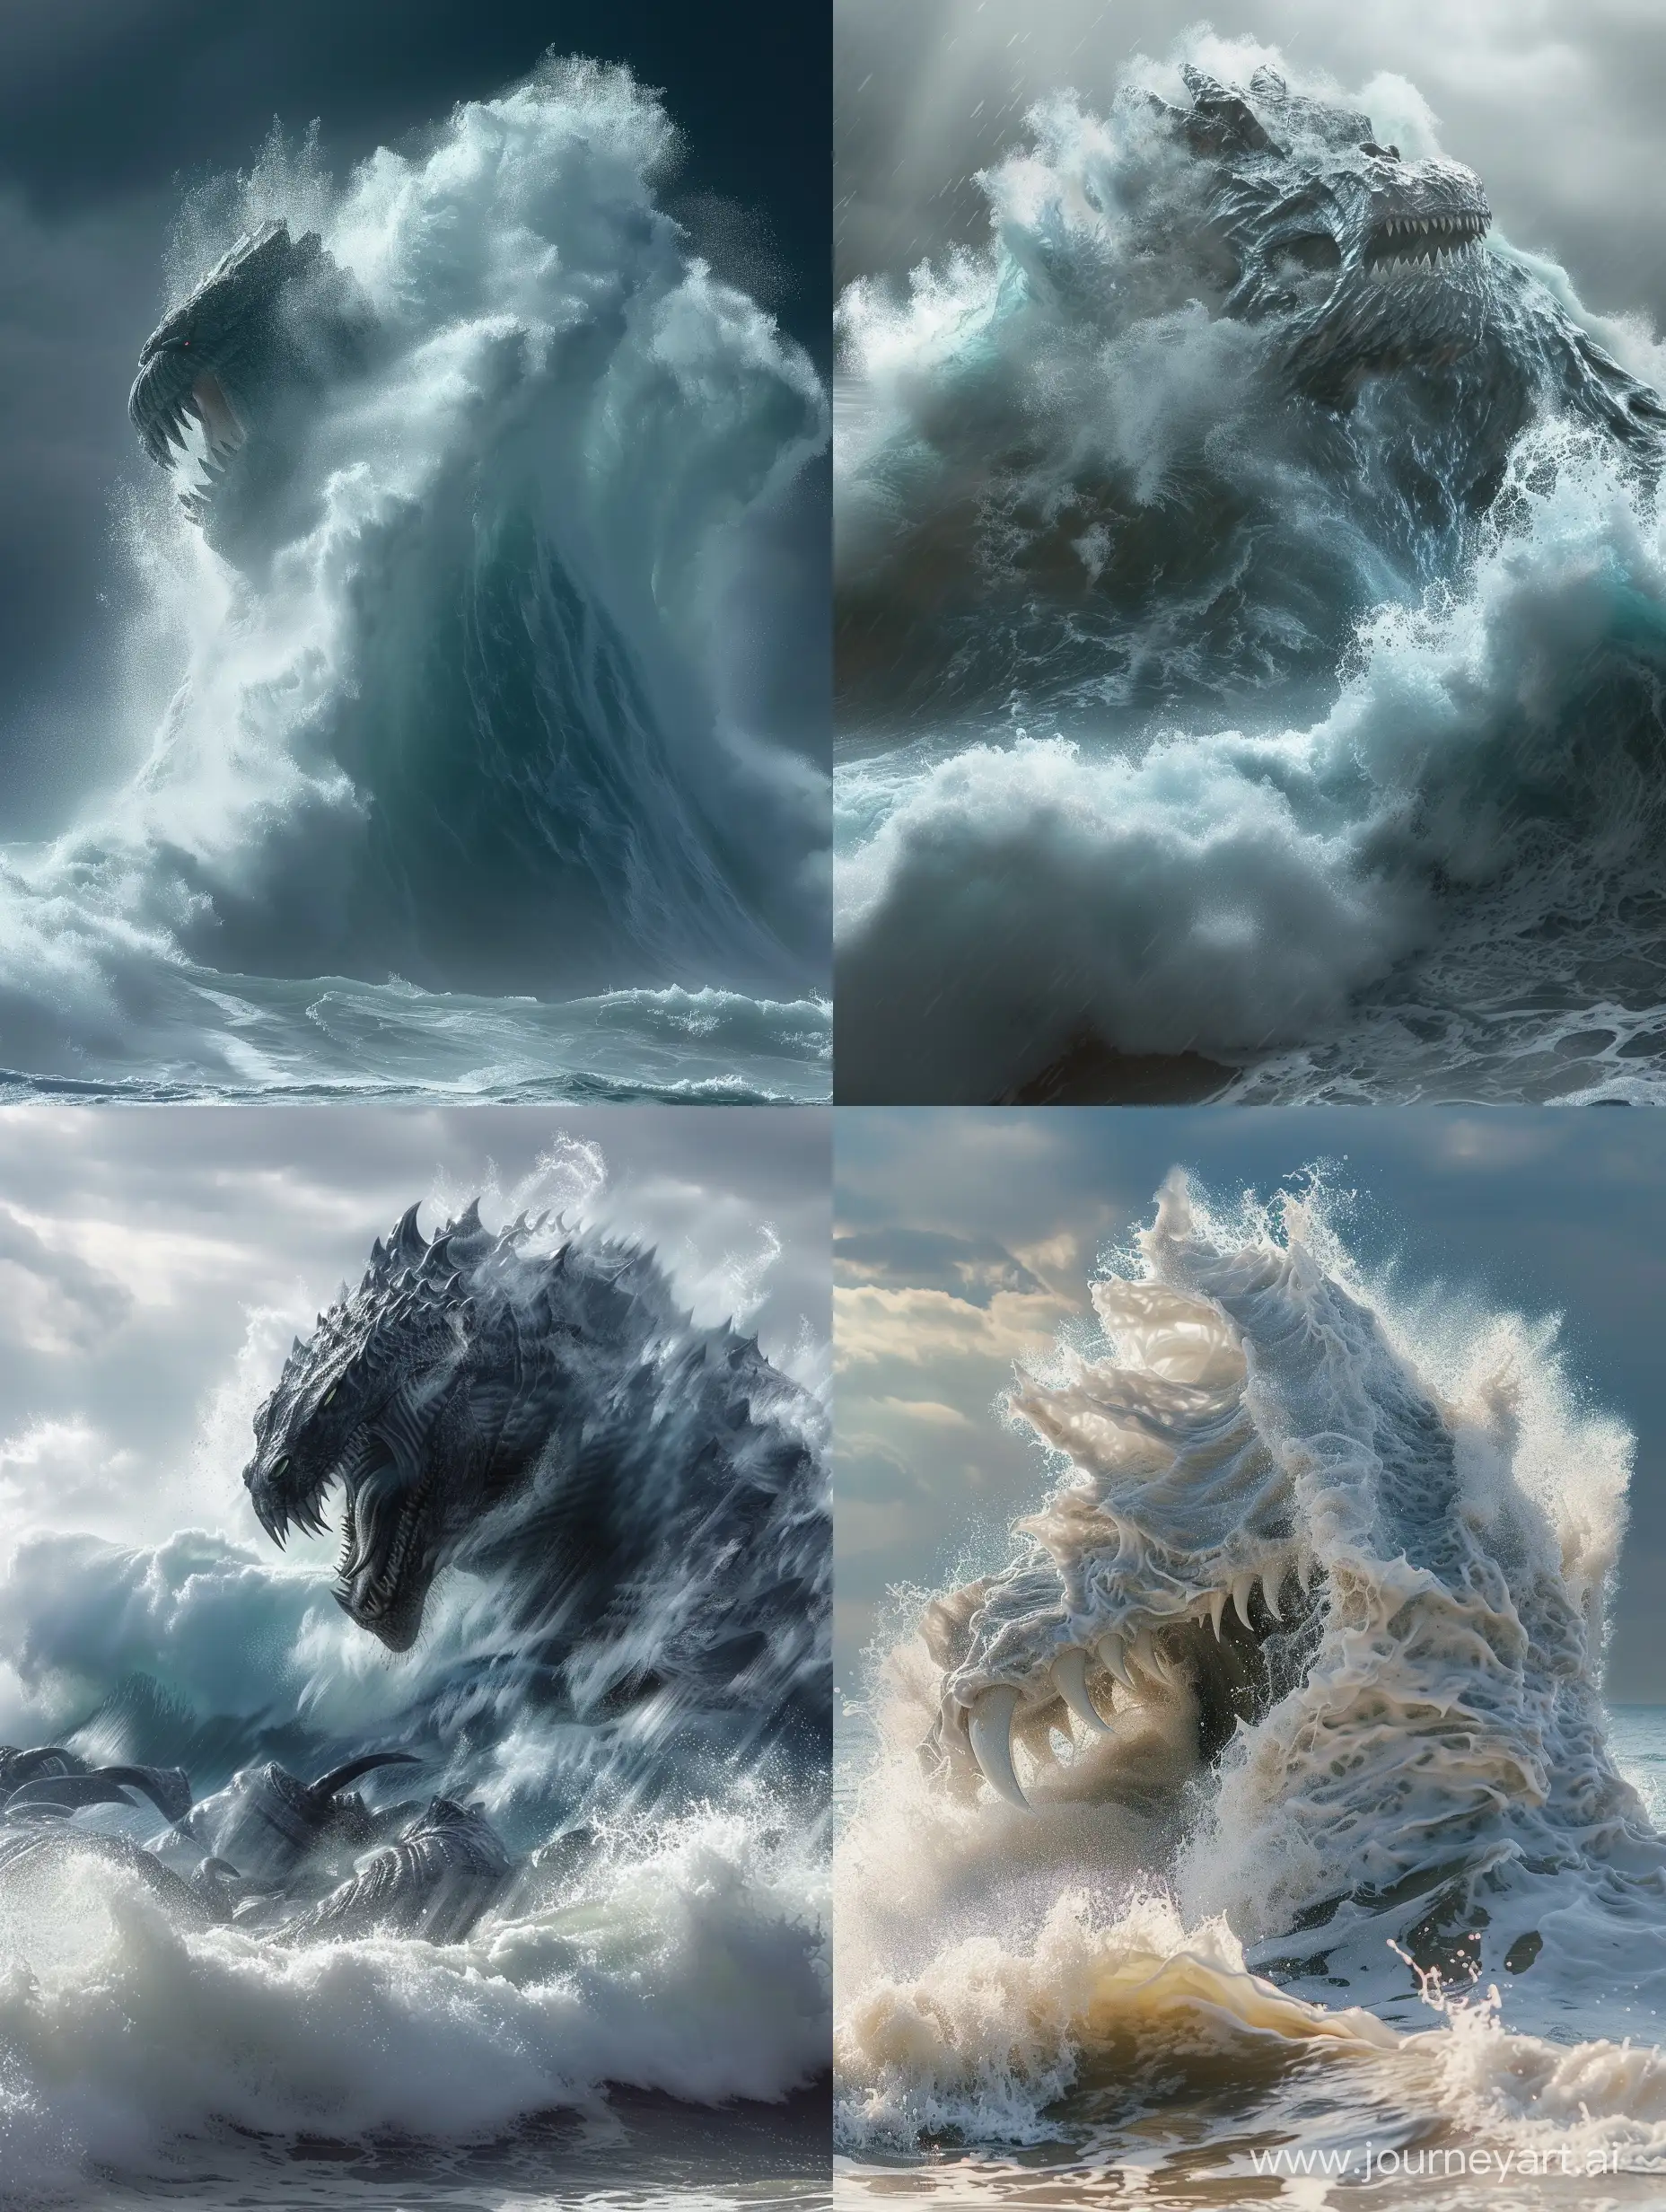 Ocean-Waves-Forming-Monster-Stunningly-Detailed-Seascape-Art